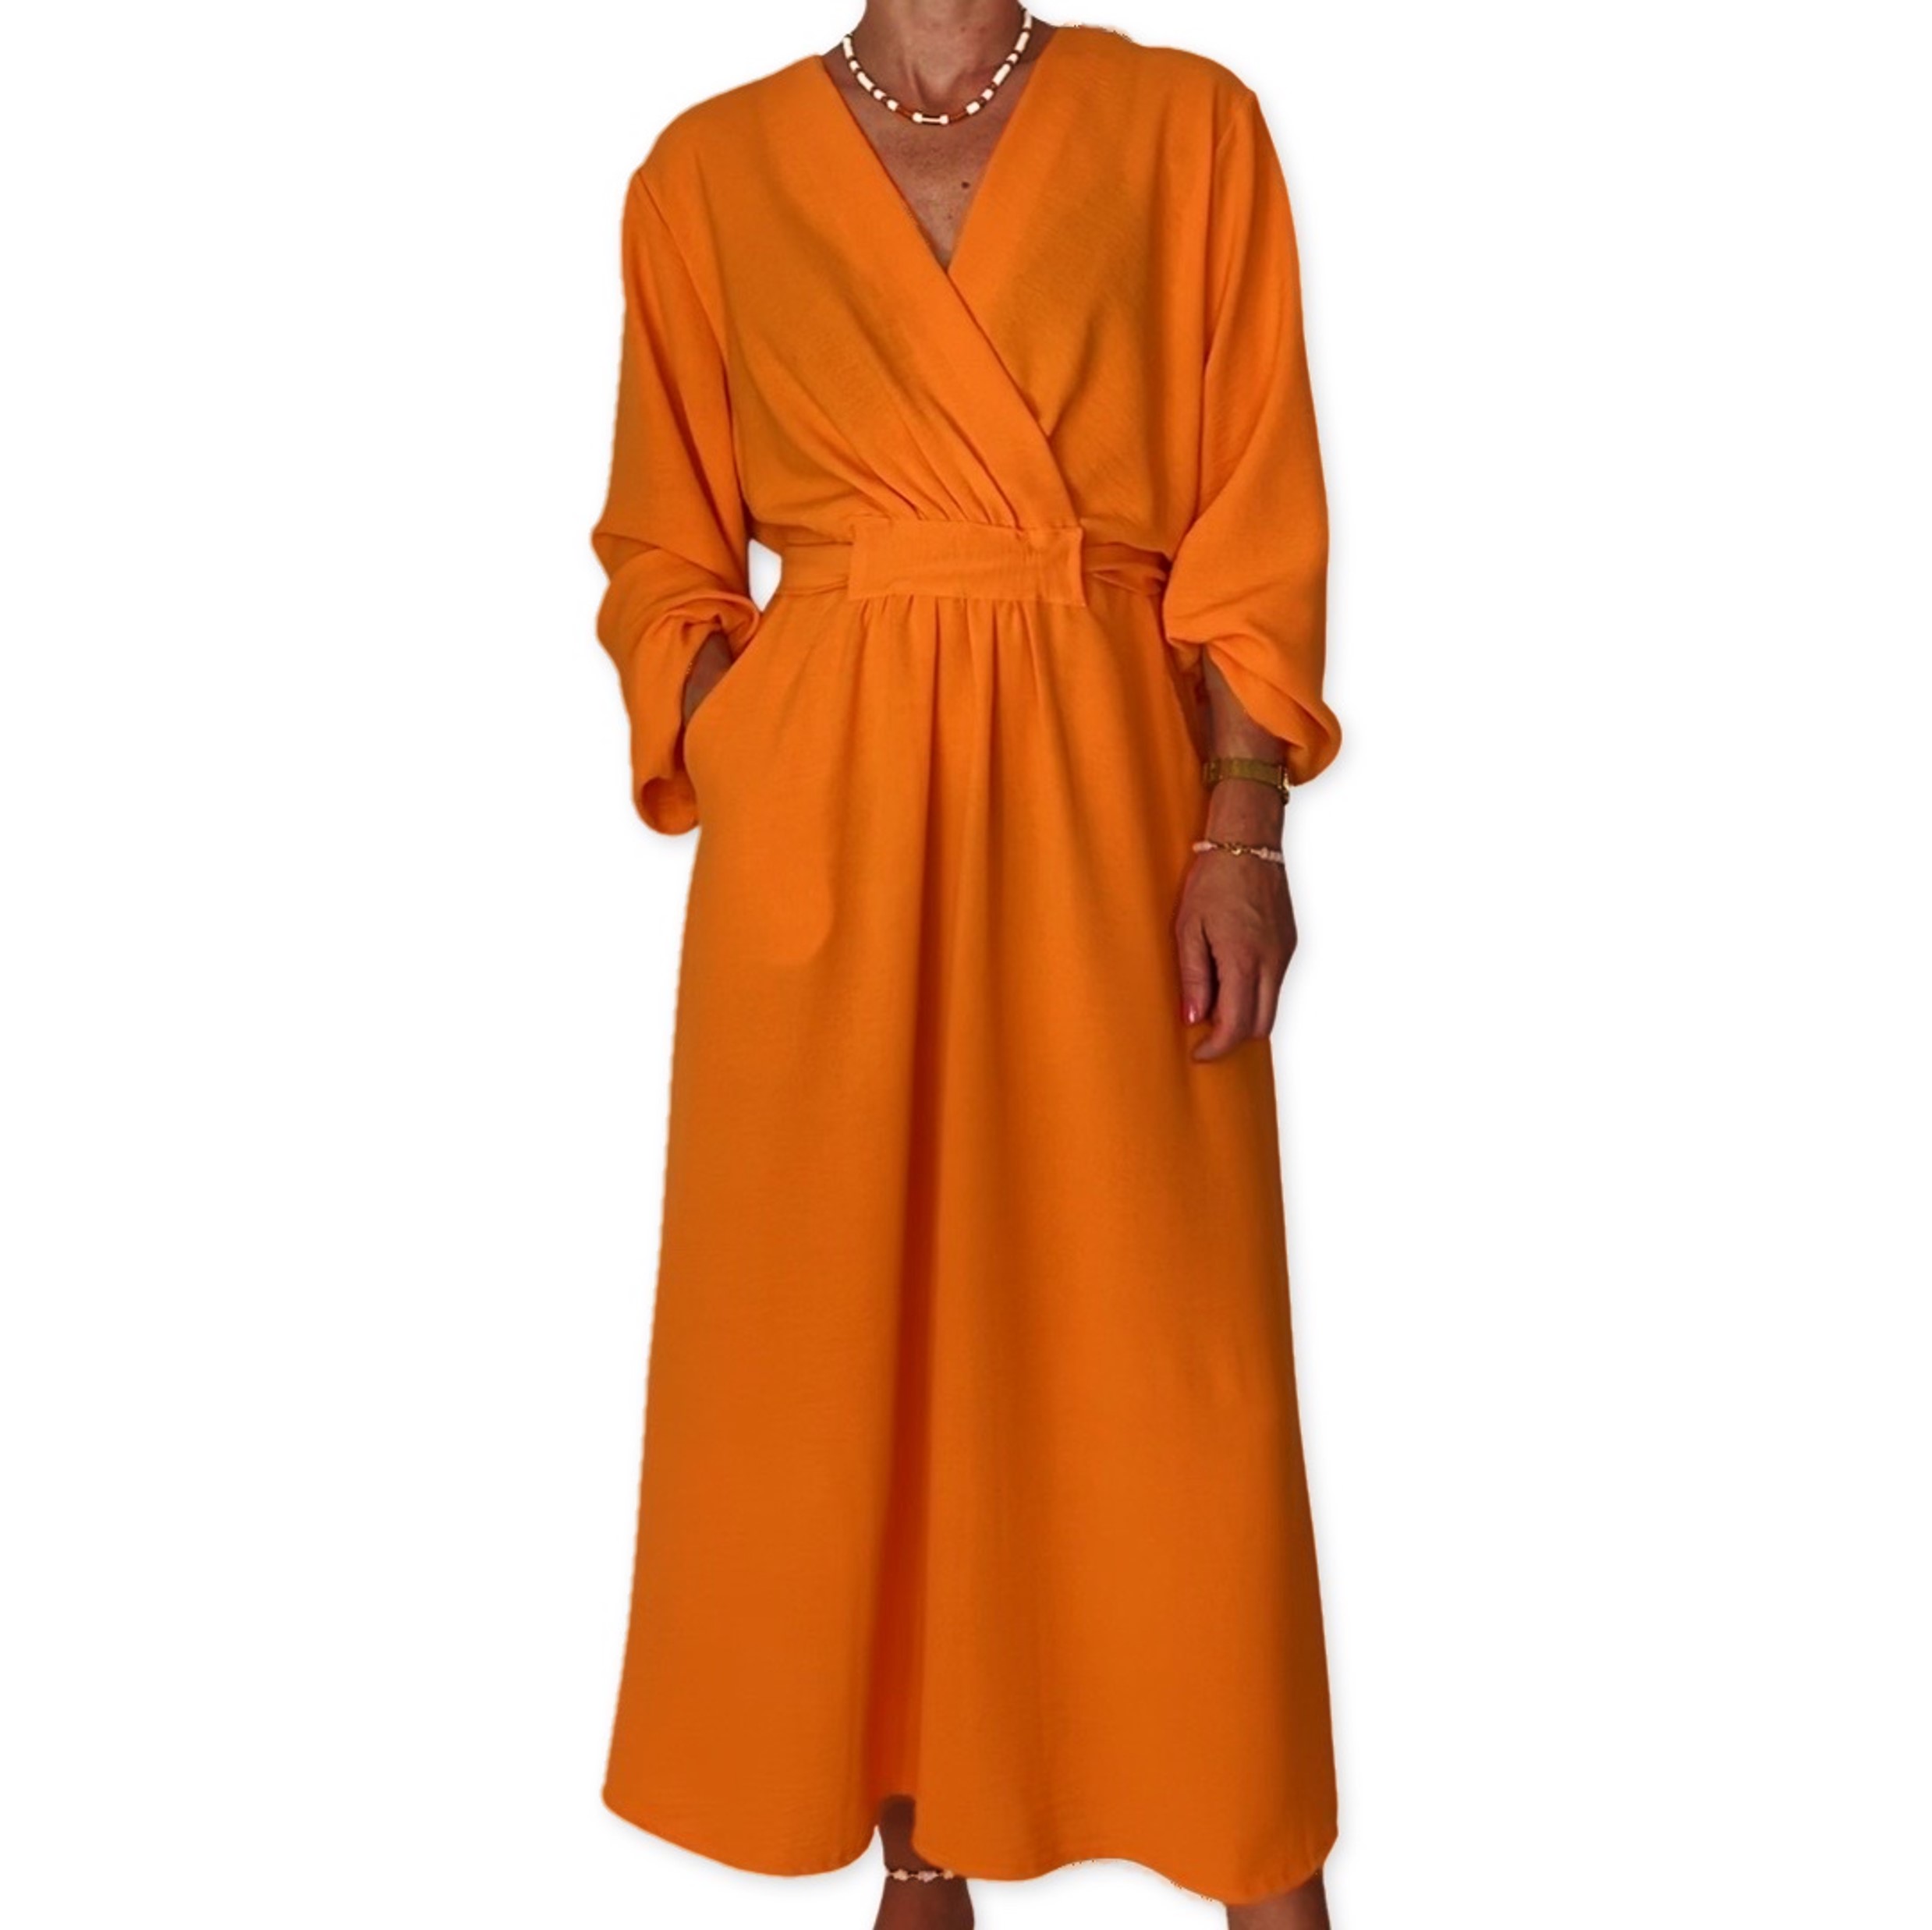 EVALIN dress Orange front